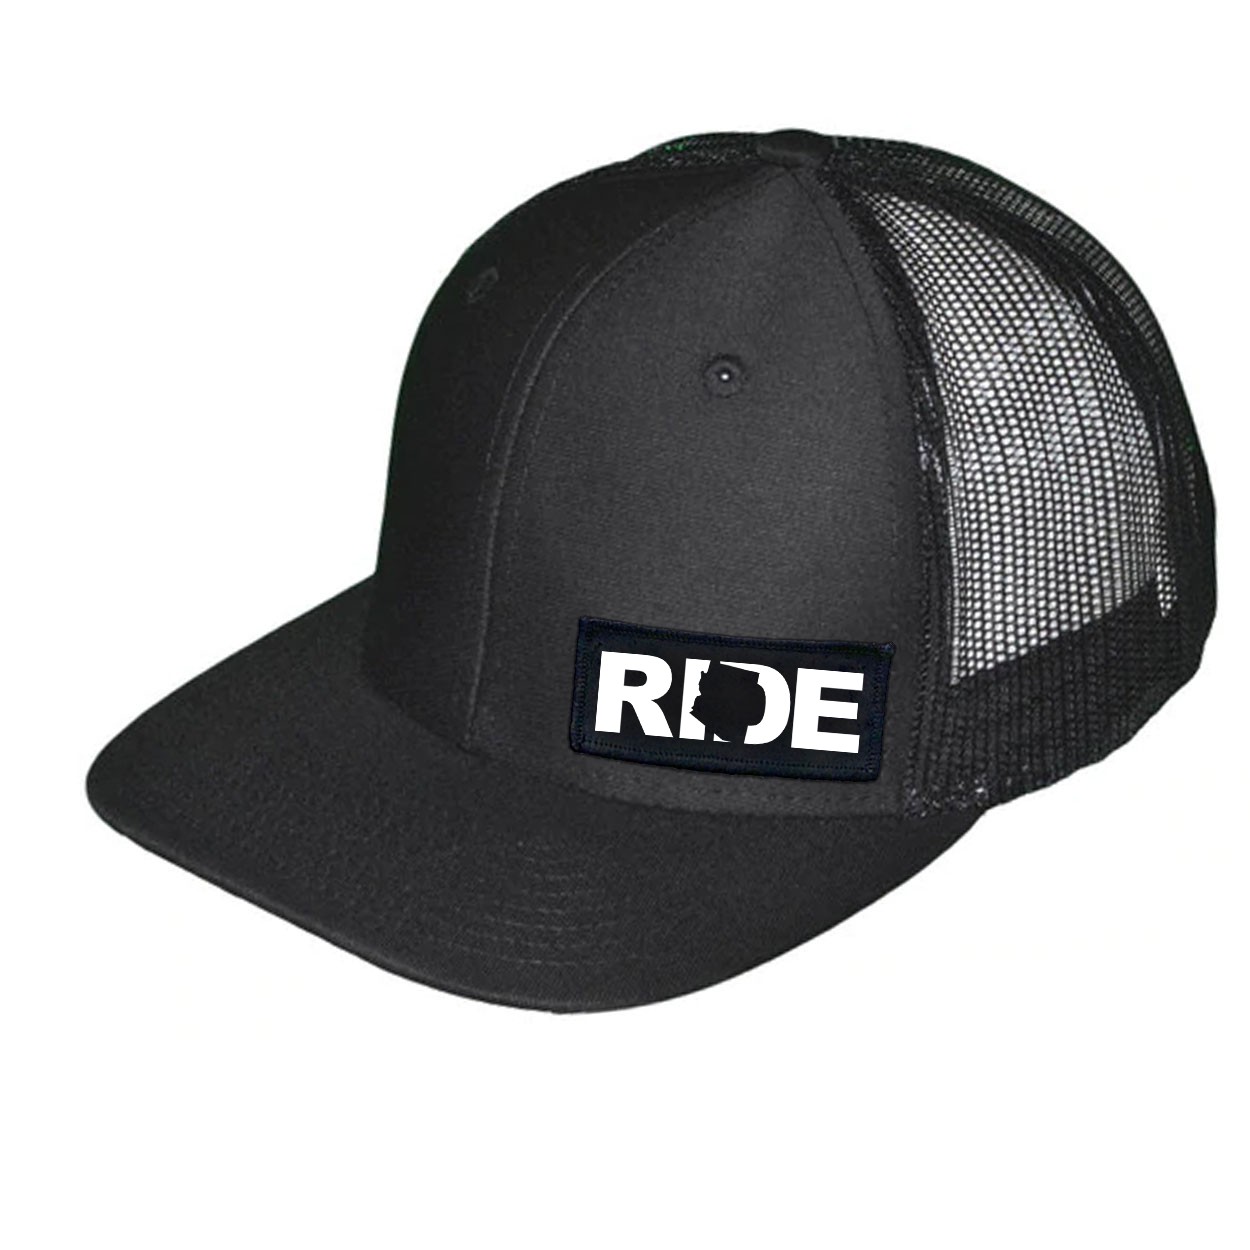 Ride Arizona Night Out Woven Patch Snapback Trucker Hat Black (White Logo)